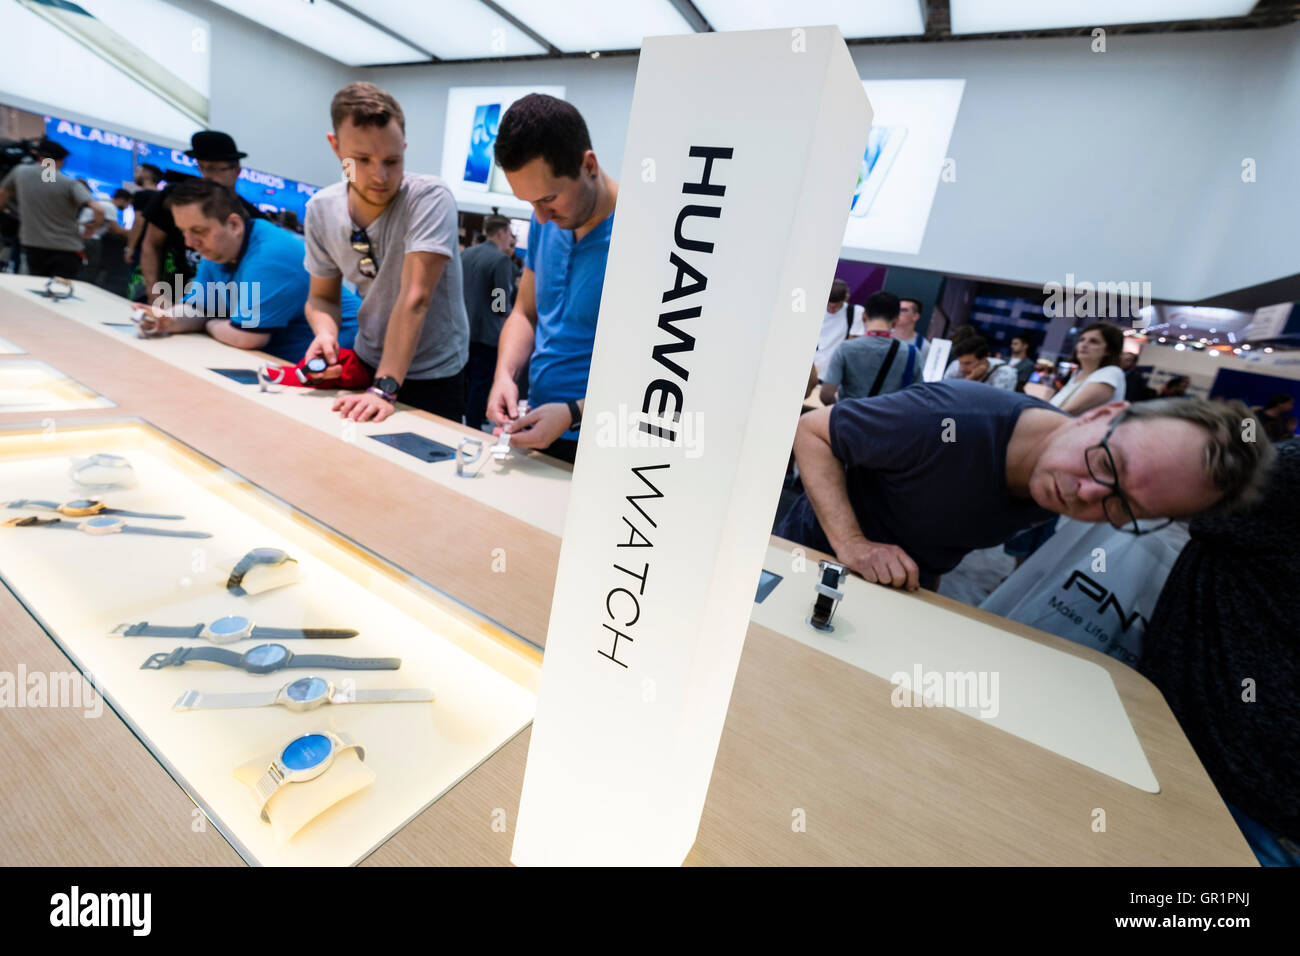 Huawei montres sur l'affichage à 2016 IFA (Internationale Funkausstellung Berlin), Berlin, Allemagne Banque D'Images